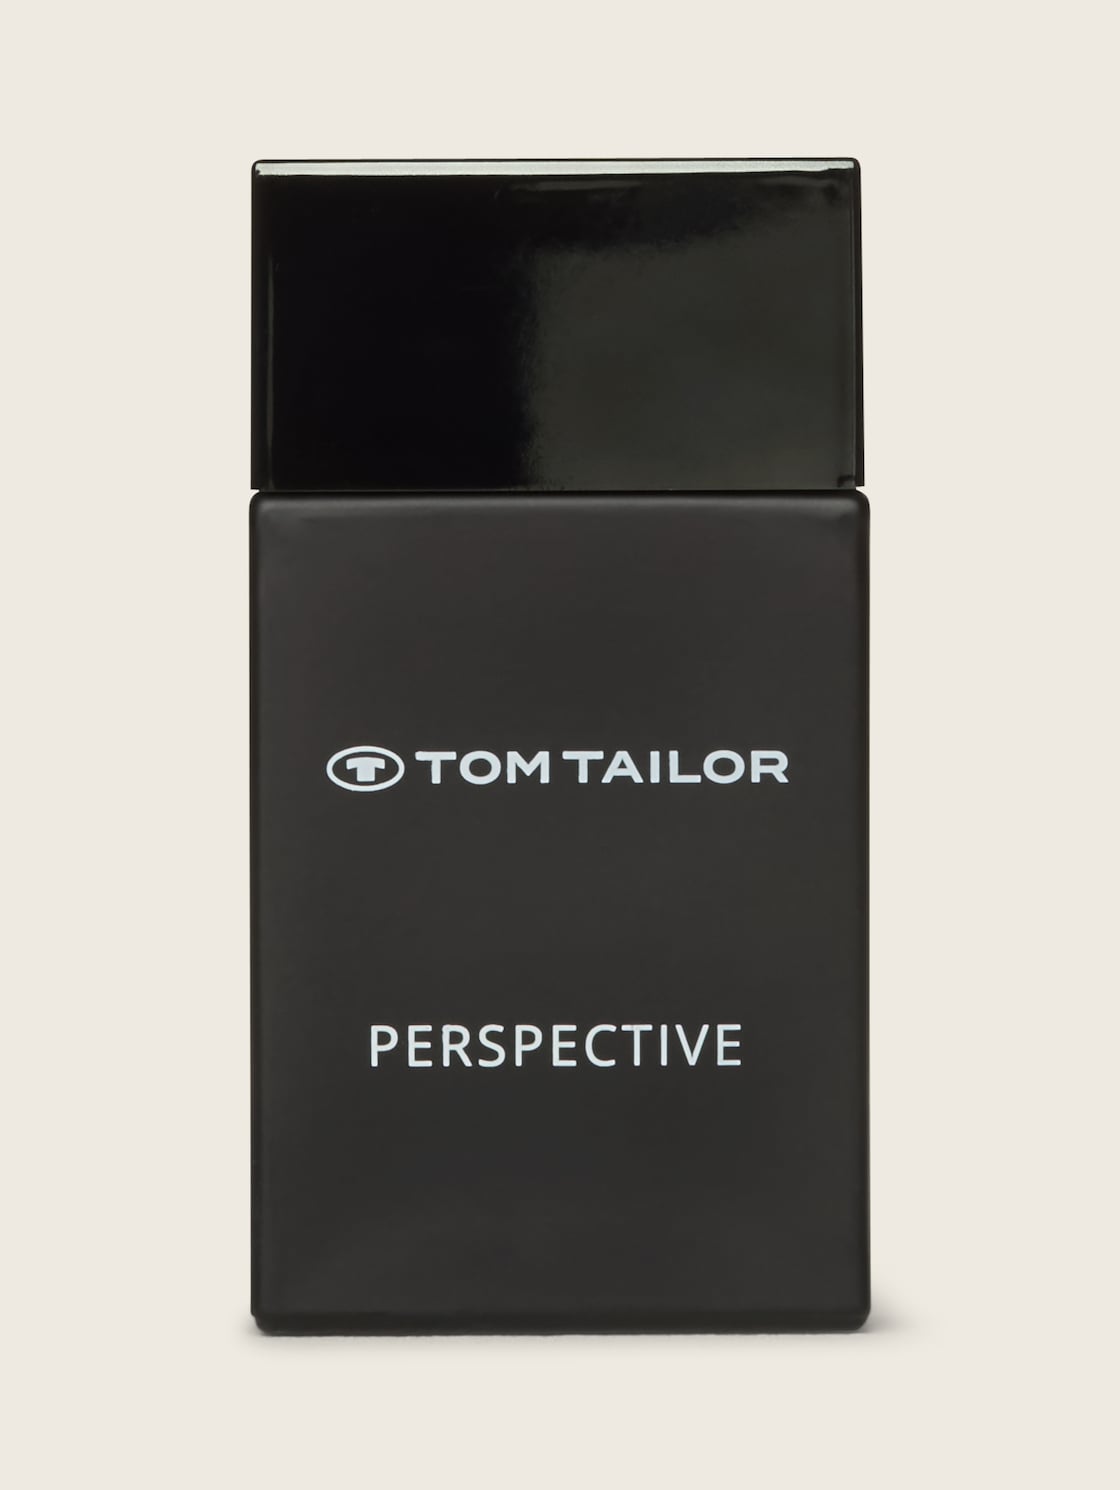 TOM TAILOR Herren Perspective Eau de Toilette 50ml, weiß, Uni, Gr. ONESIZE von Tom Tailor